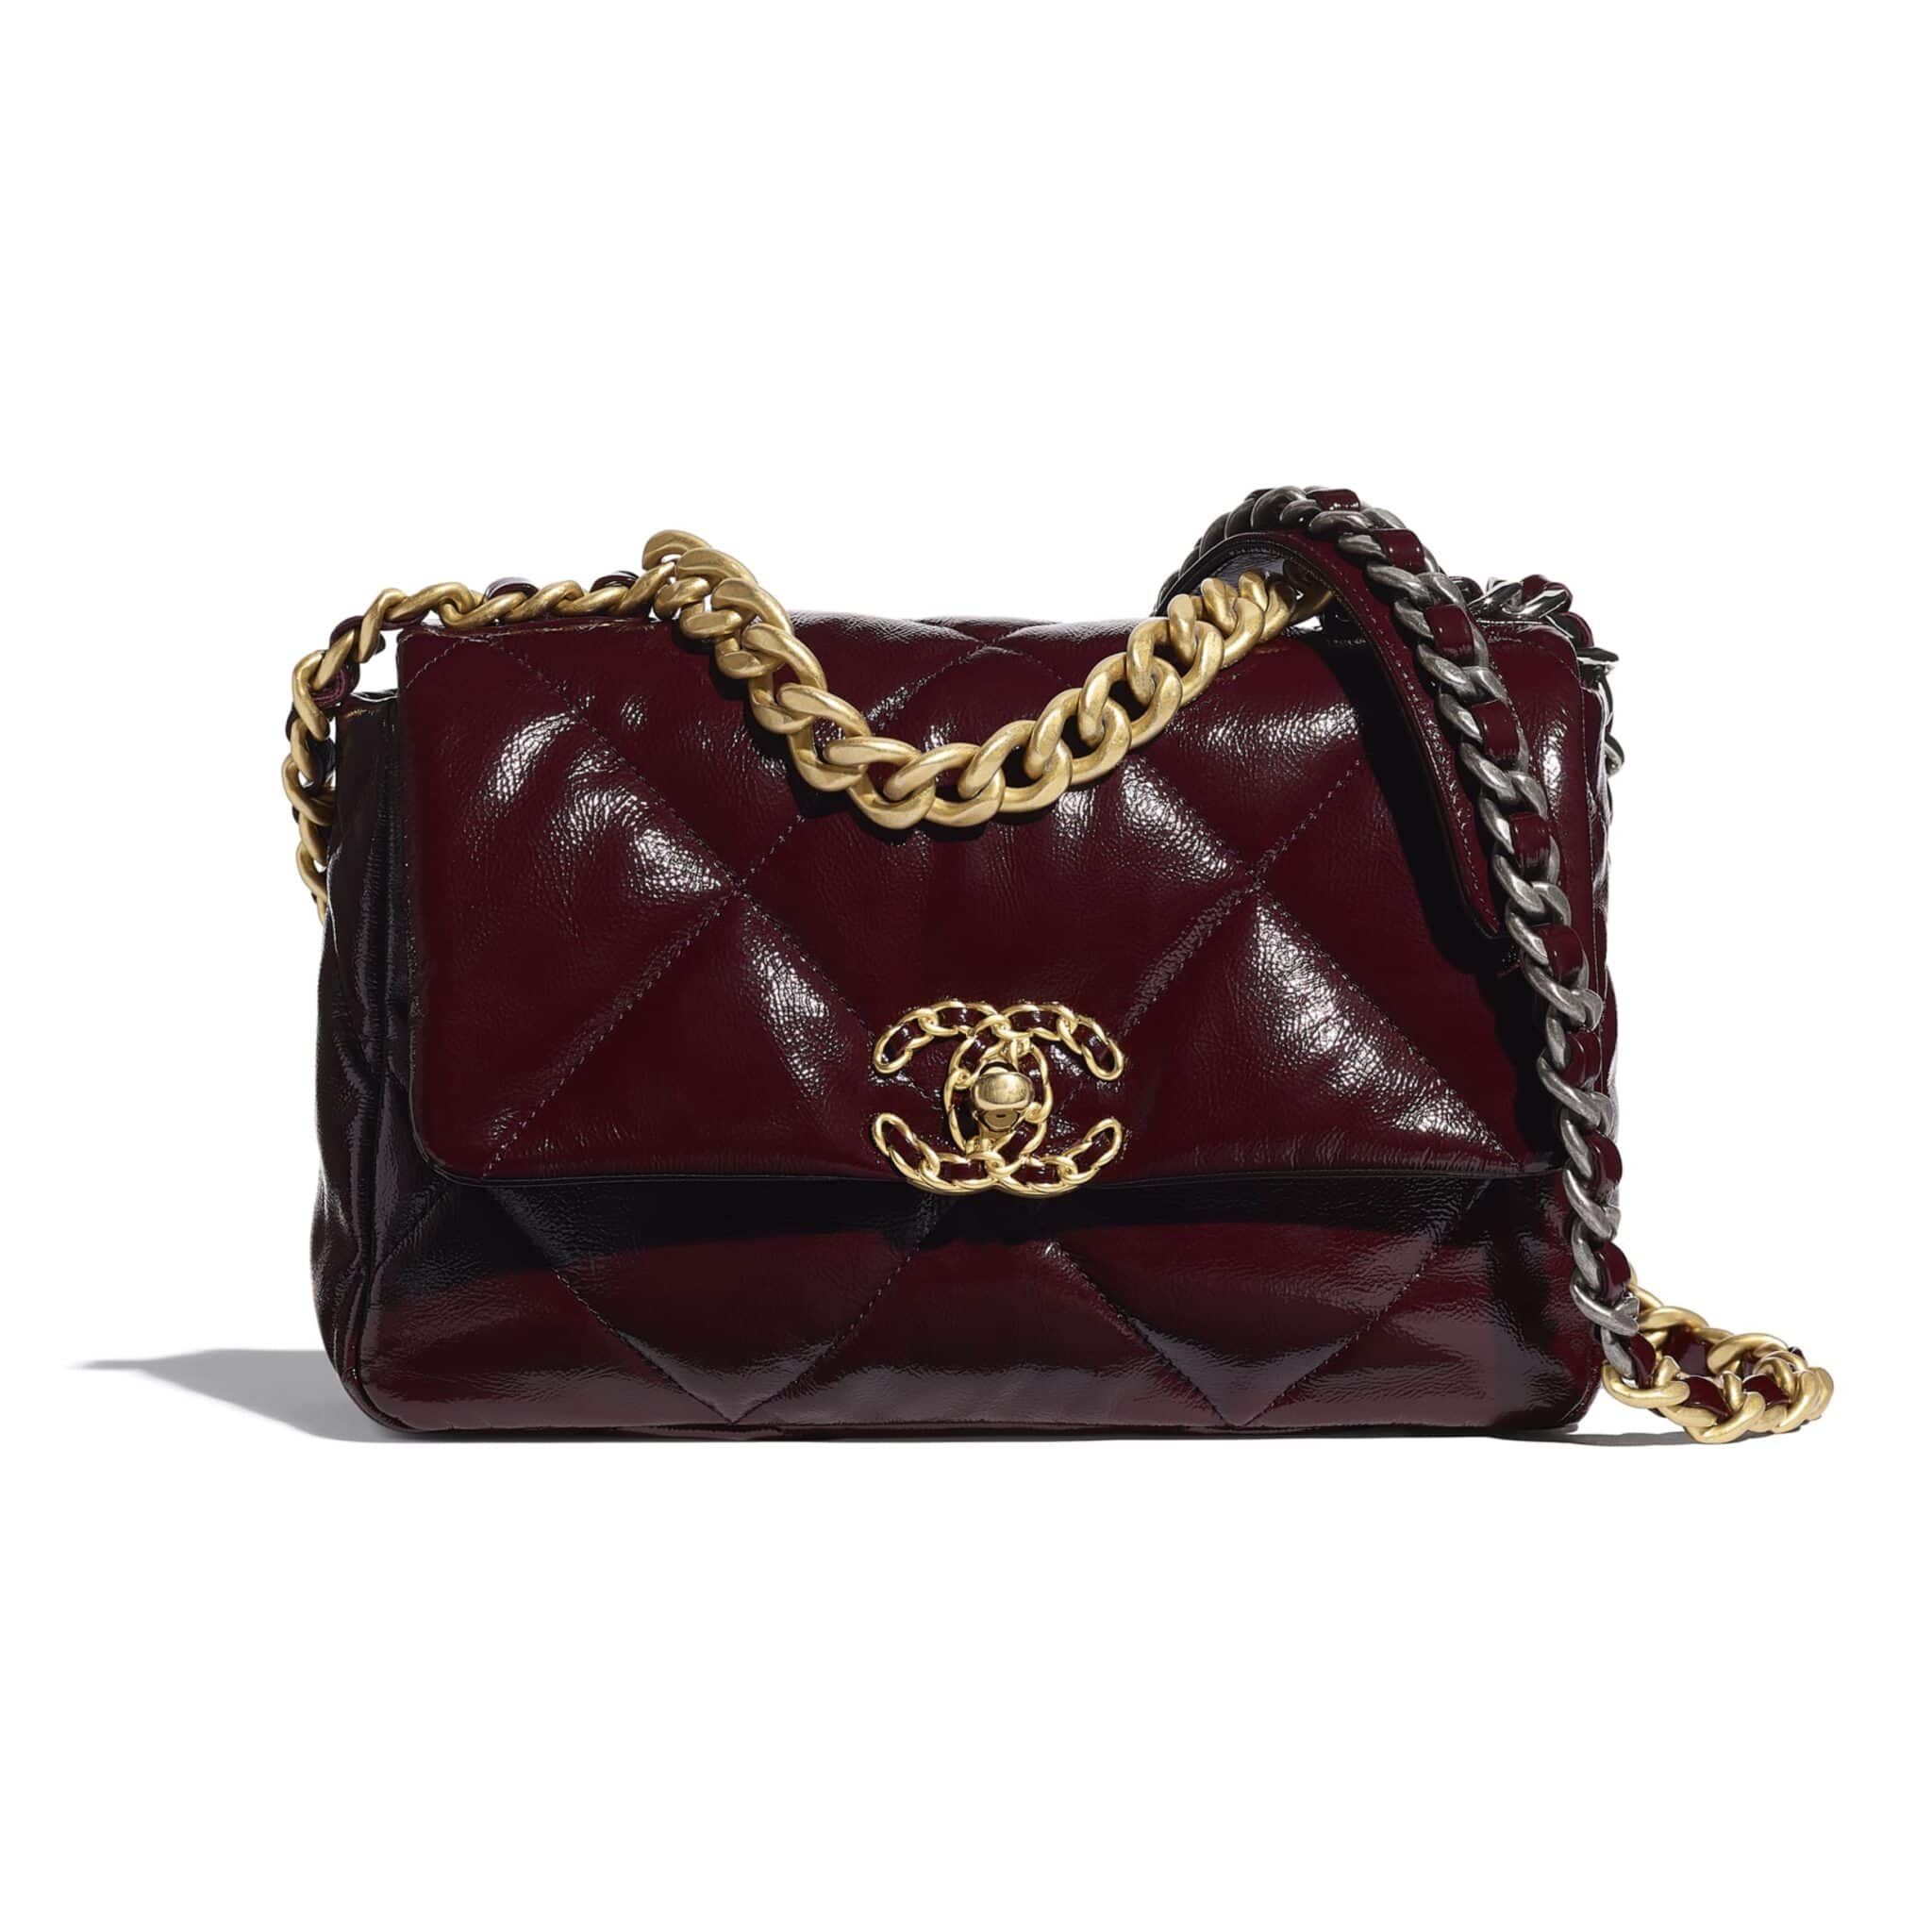 CHANEL Shopping Bag Shiny Aged Calfskin GoldTone SilverTone   RutheniumFinish Metal Black  AS1875B0340894305  Ha  Fashion handbags  Chanel flap bag Bags